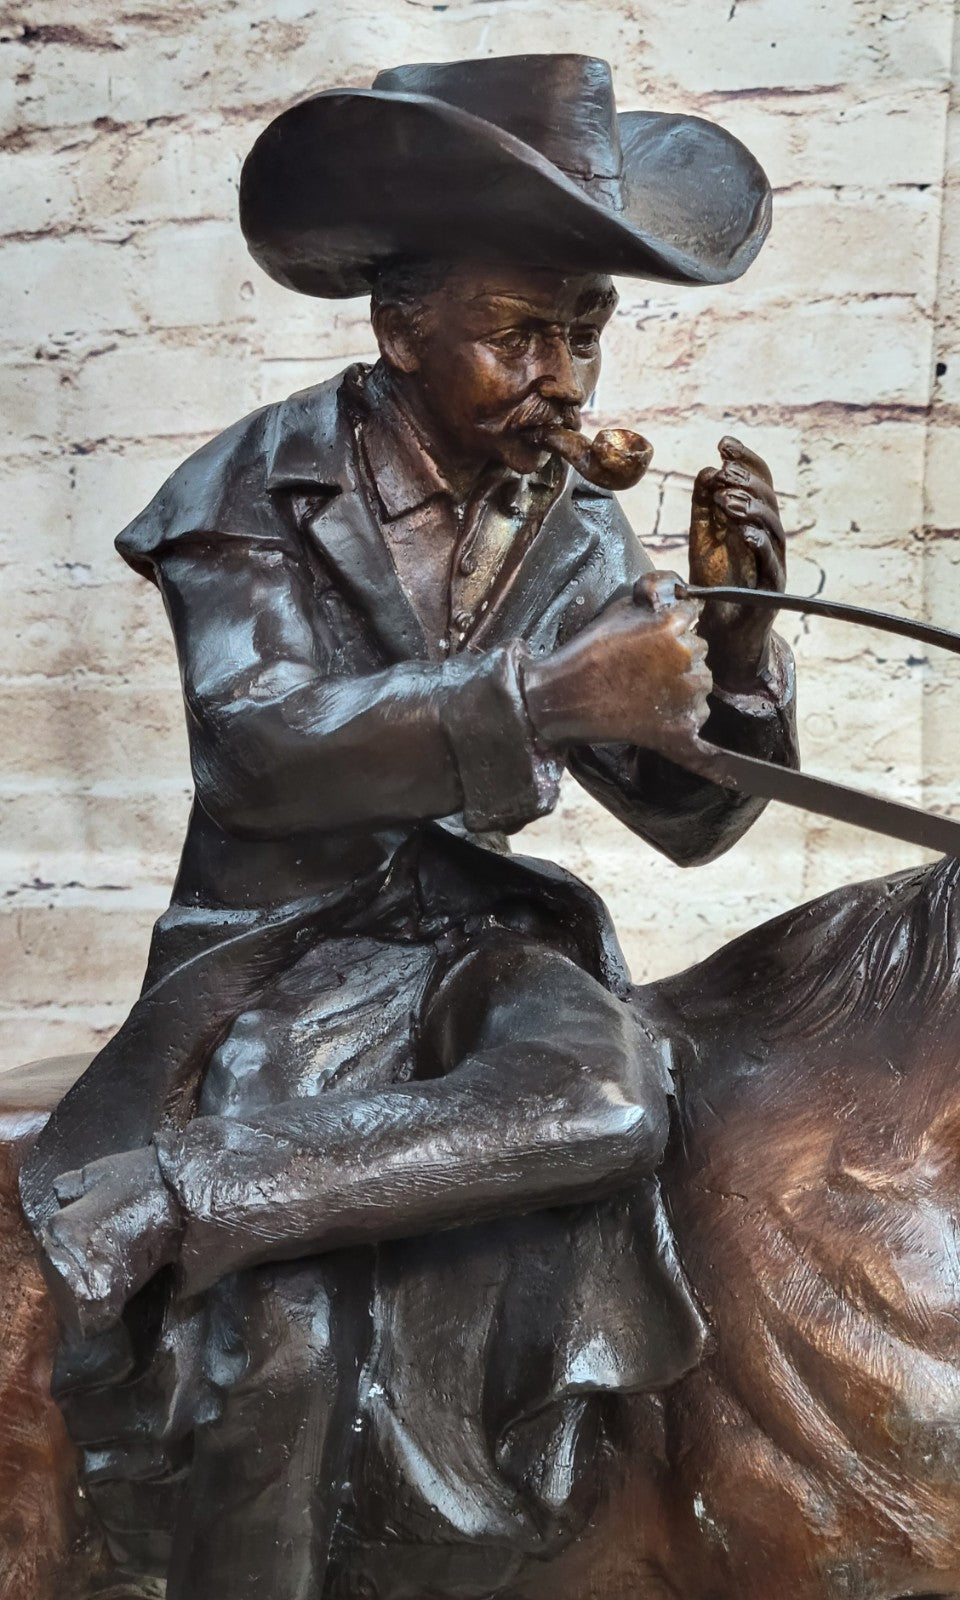 Handcrafted bronze sculpture SALE Smoking Horse Cowboy by Remington Artwork